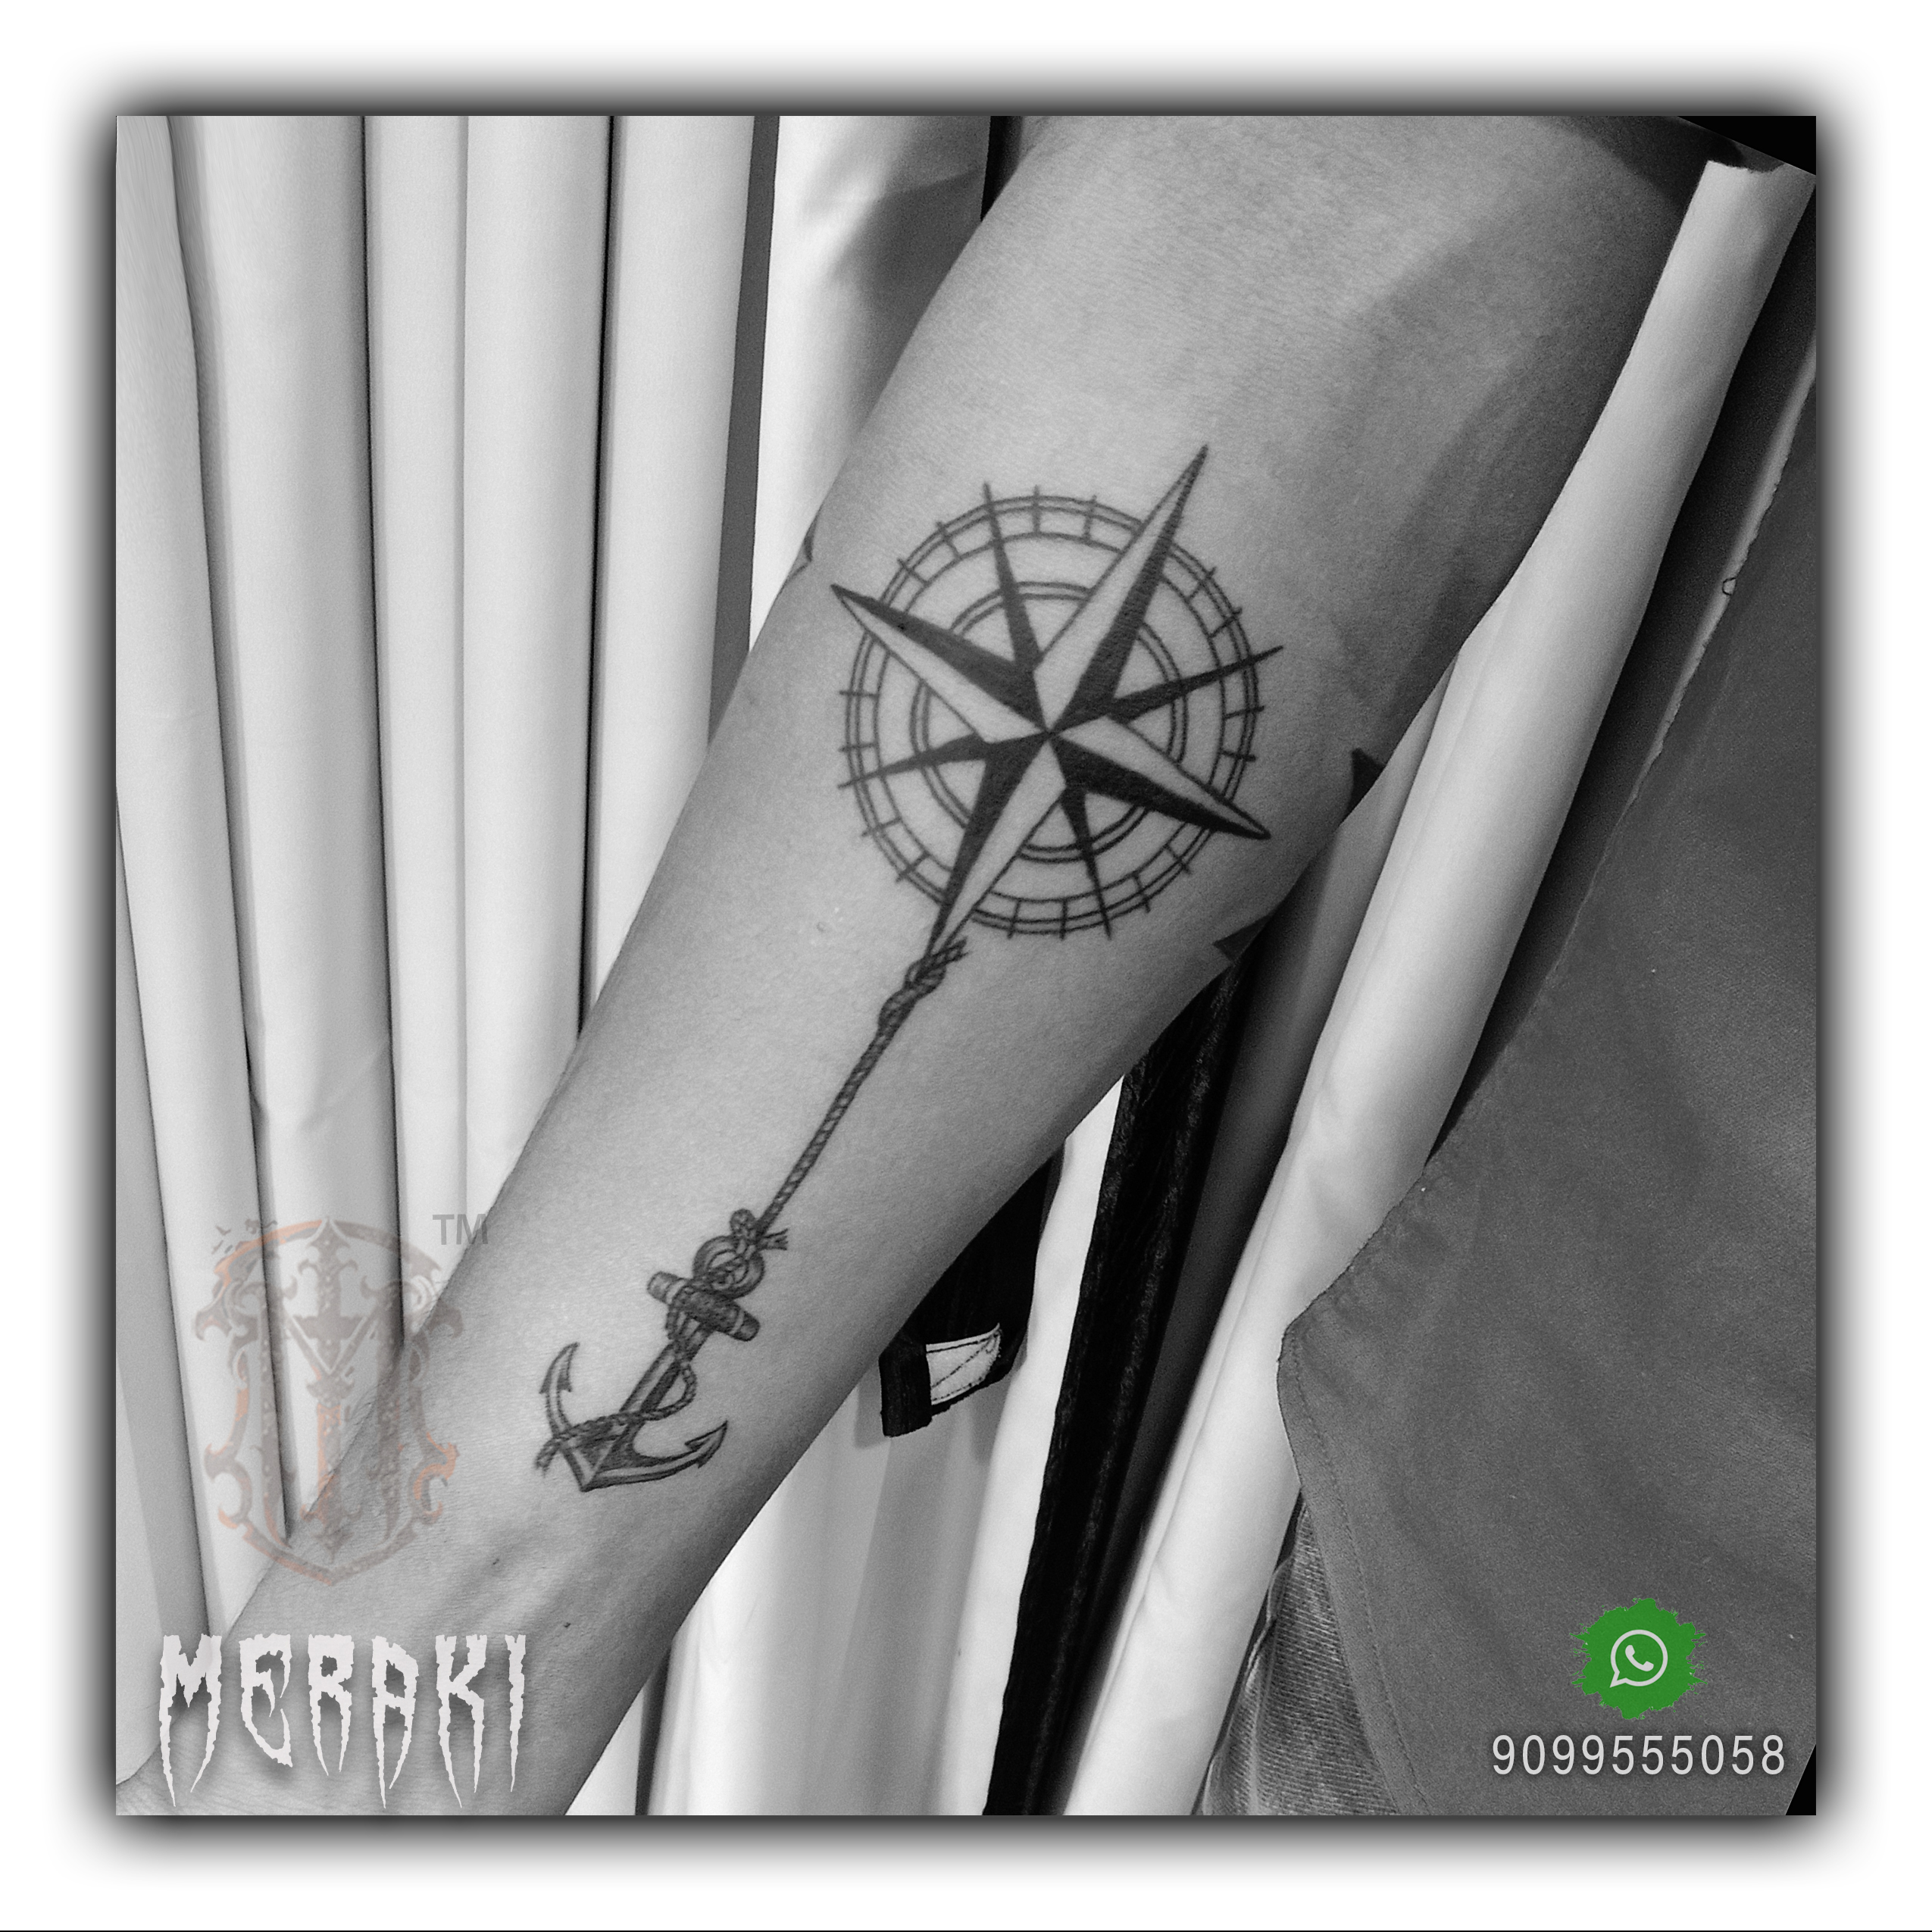 Meraki tattoos and piercing on Twitter: 